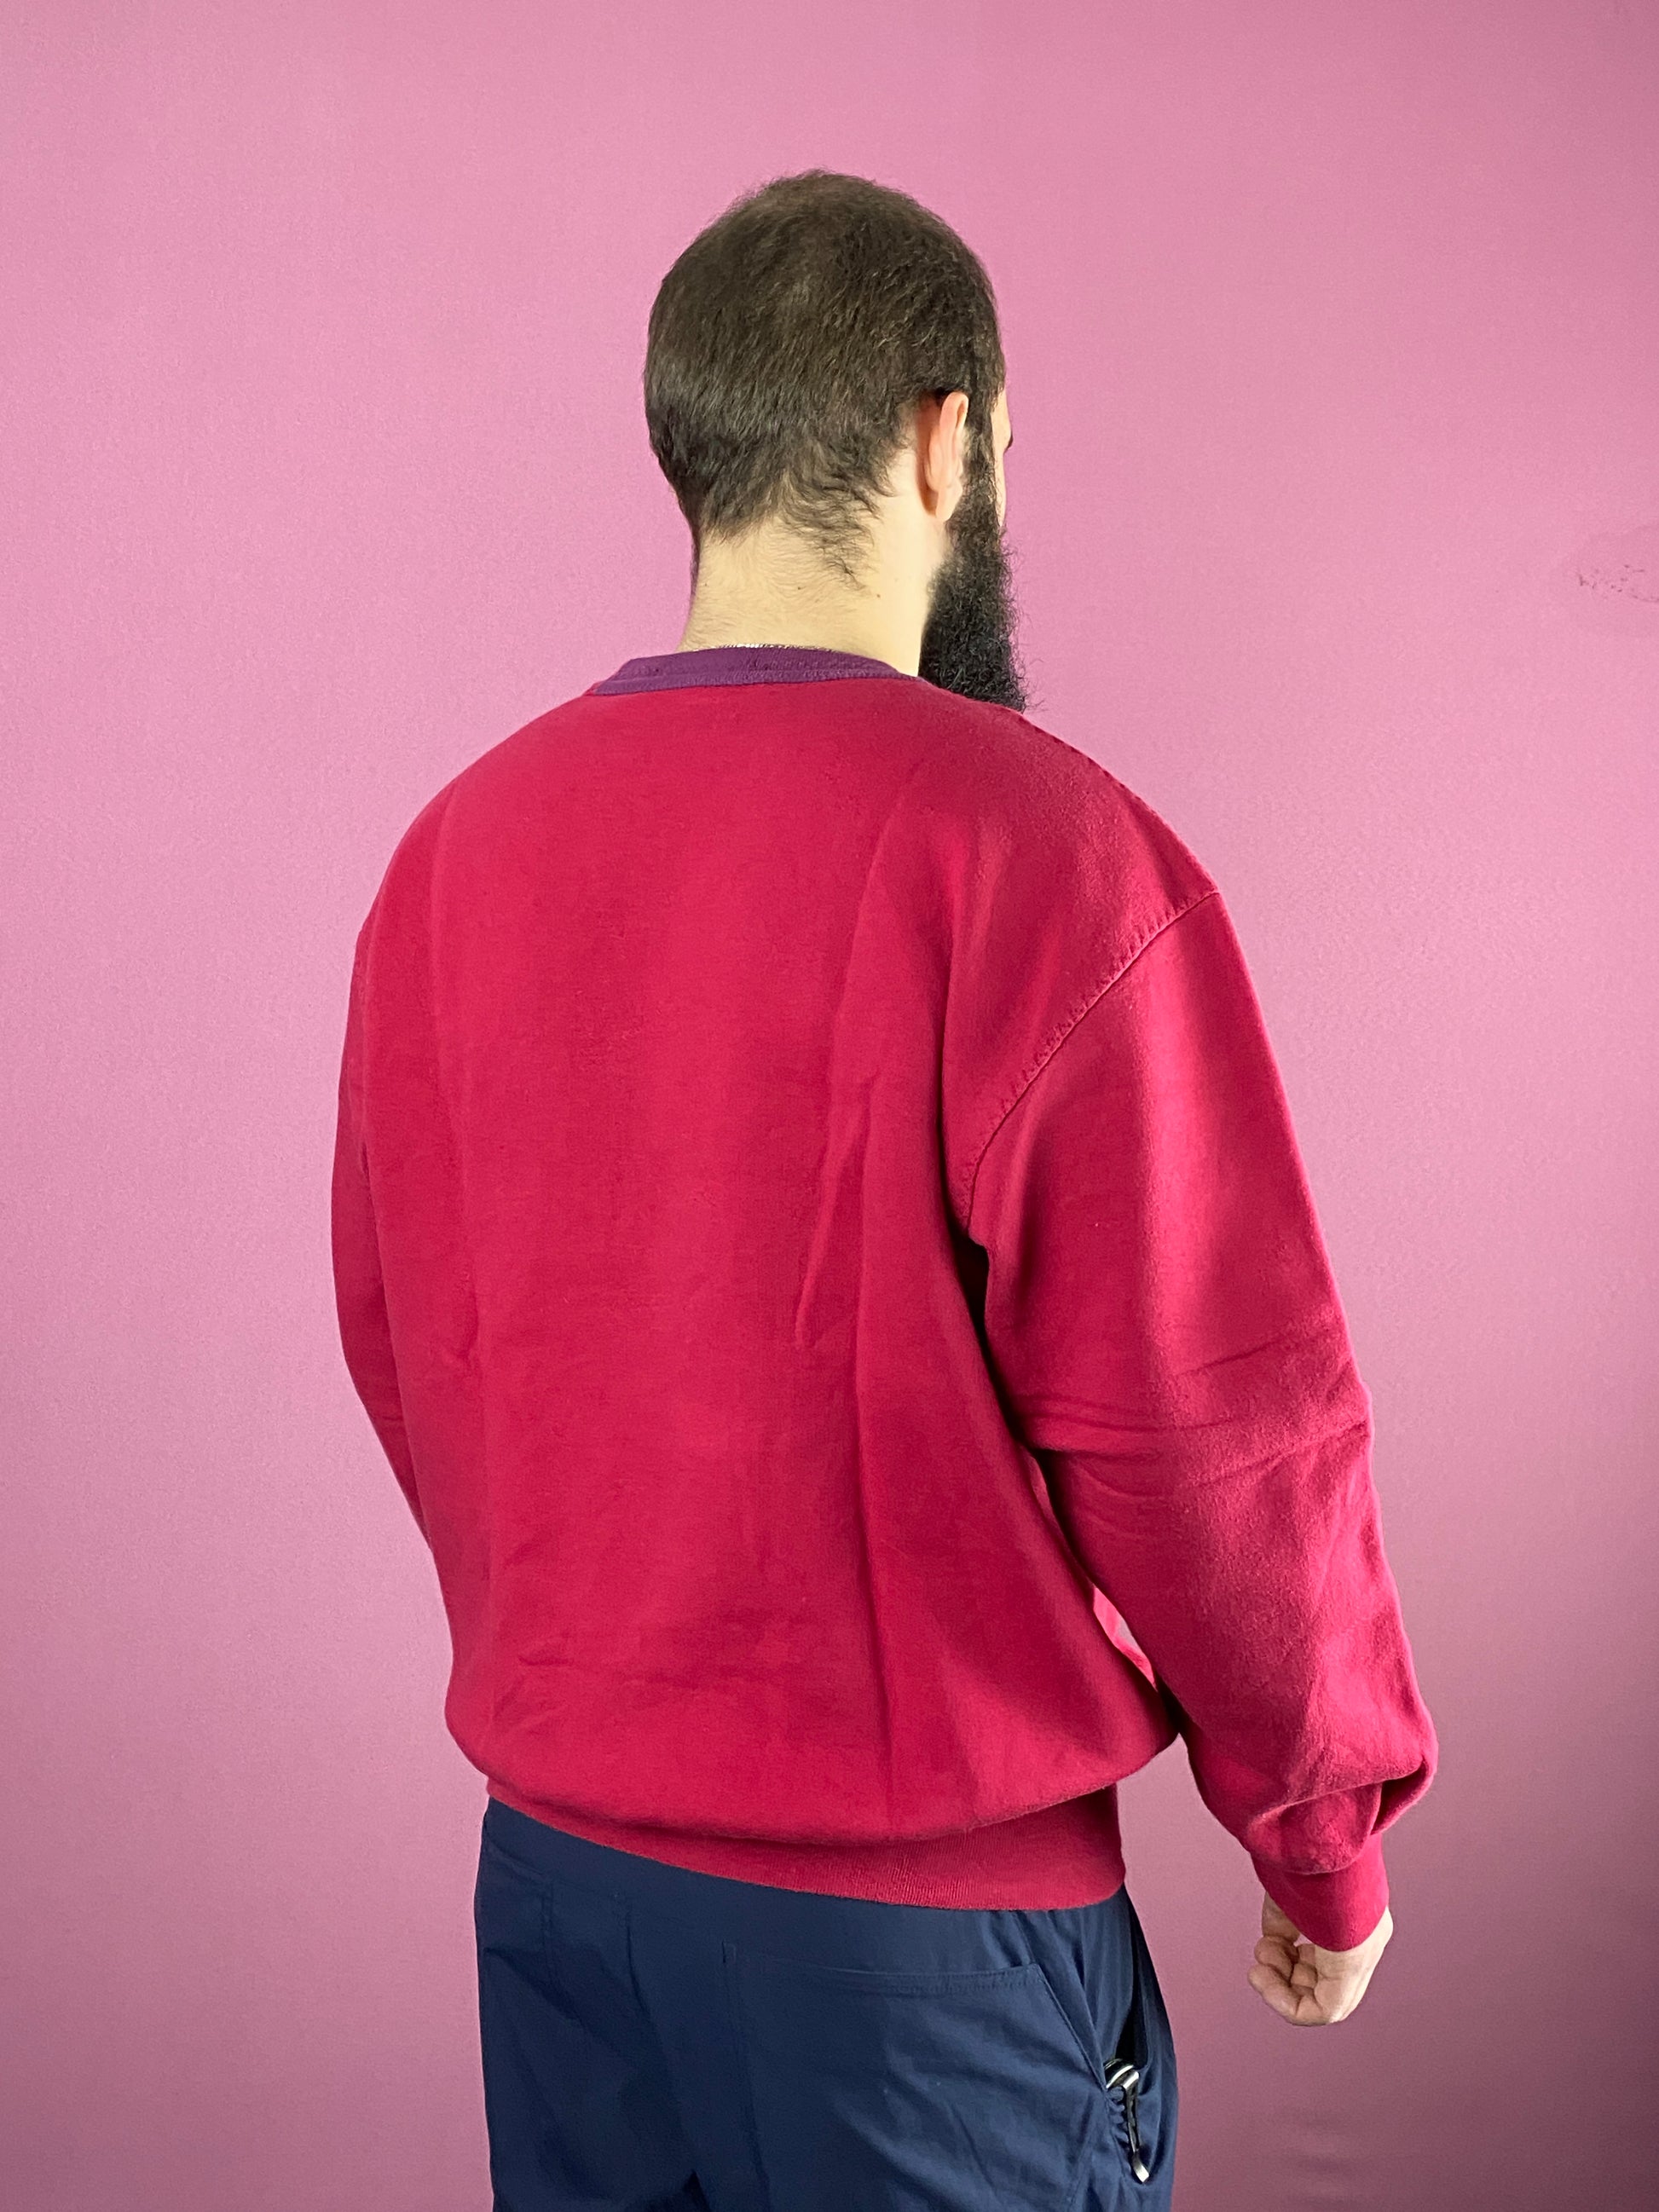 80s Best Company Olmes Carretti Vintage Men's Sweatshirt - XL Red Cotton